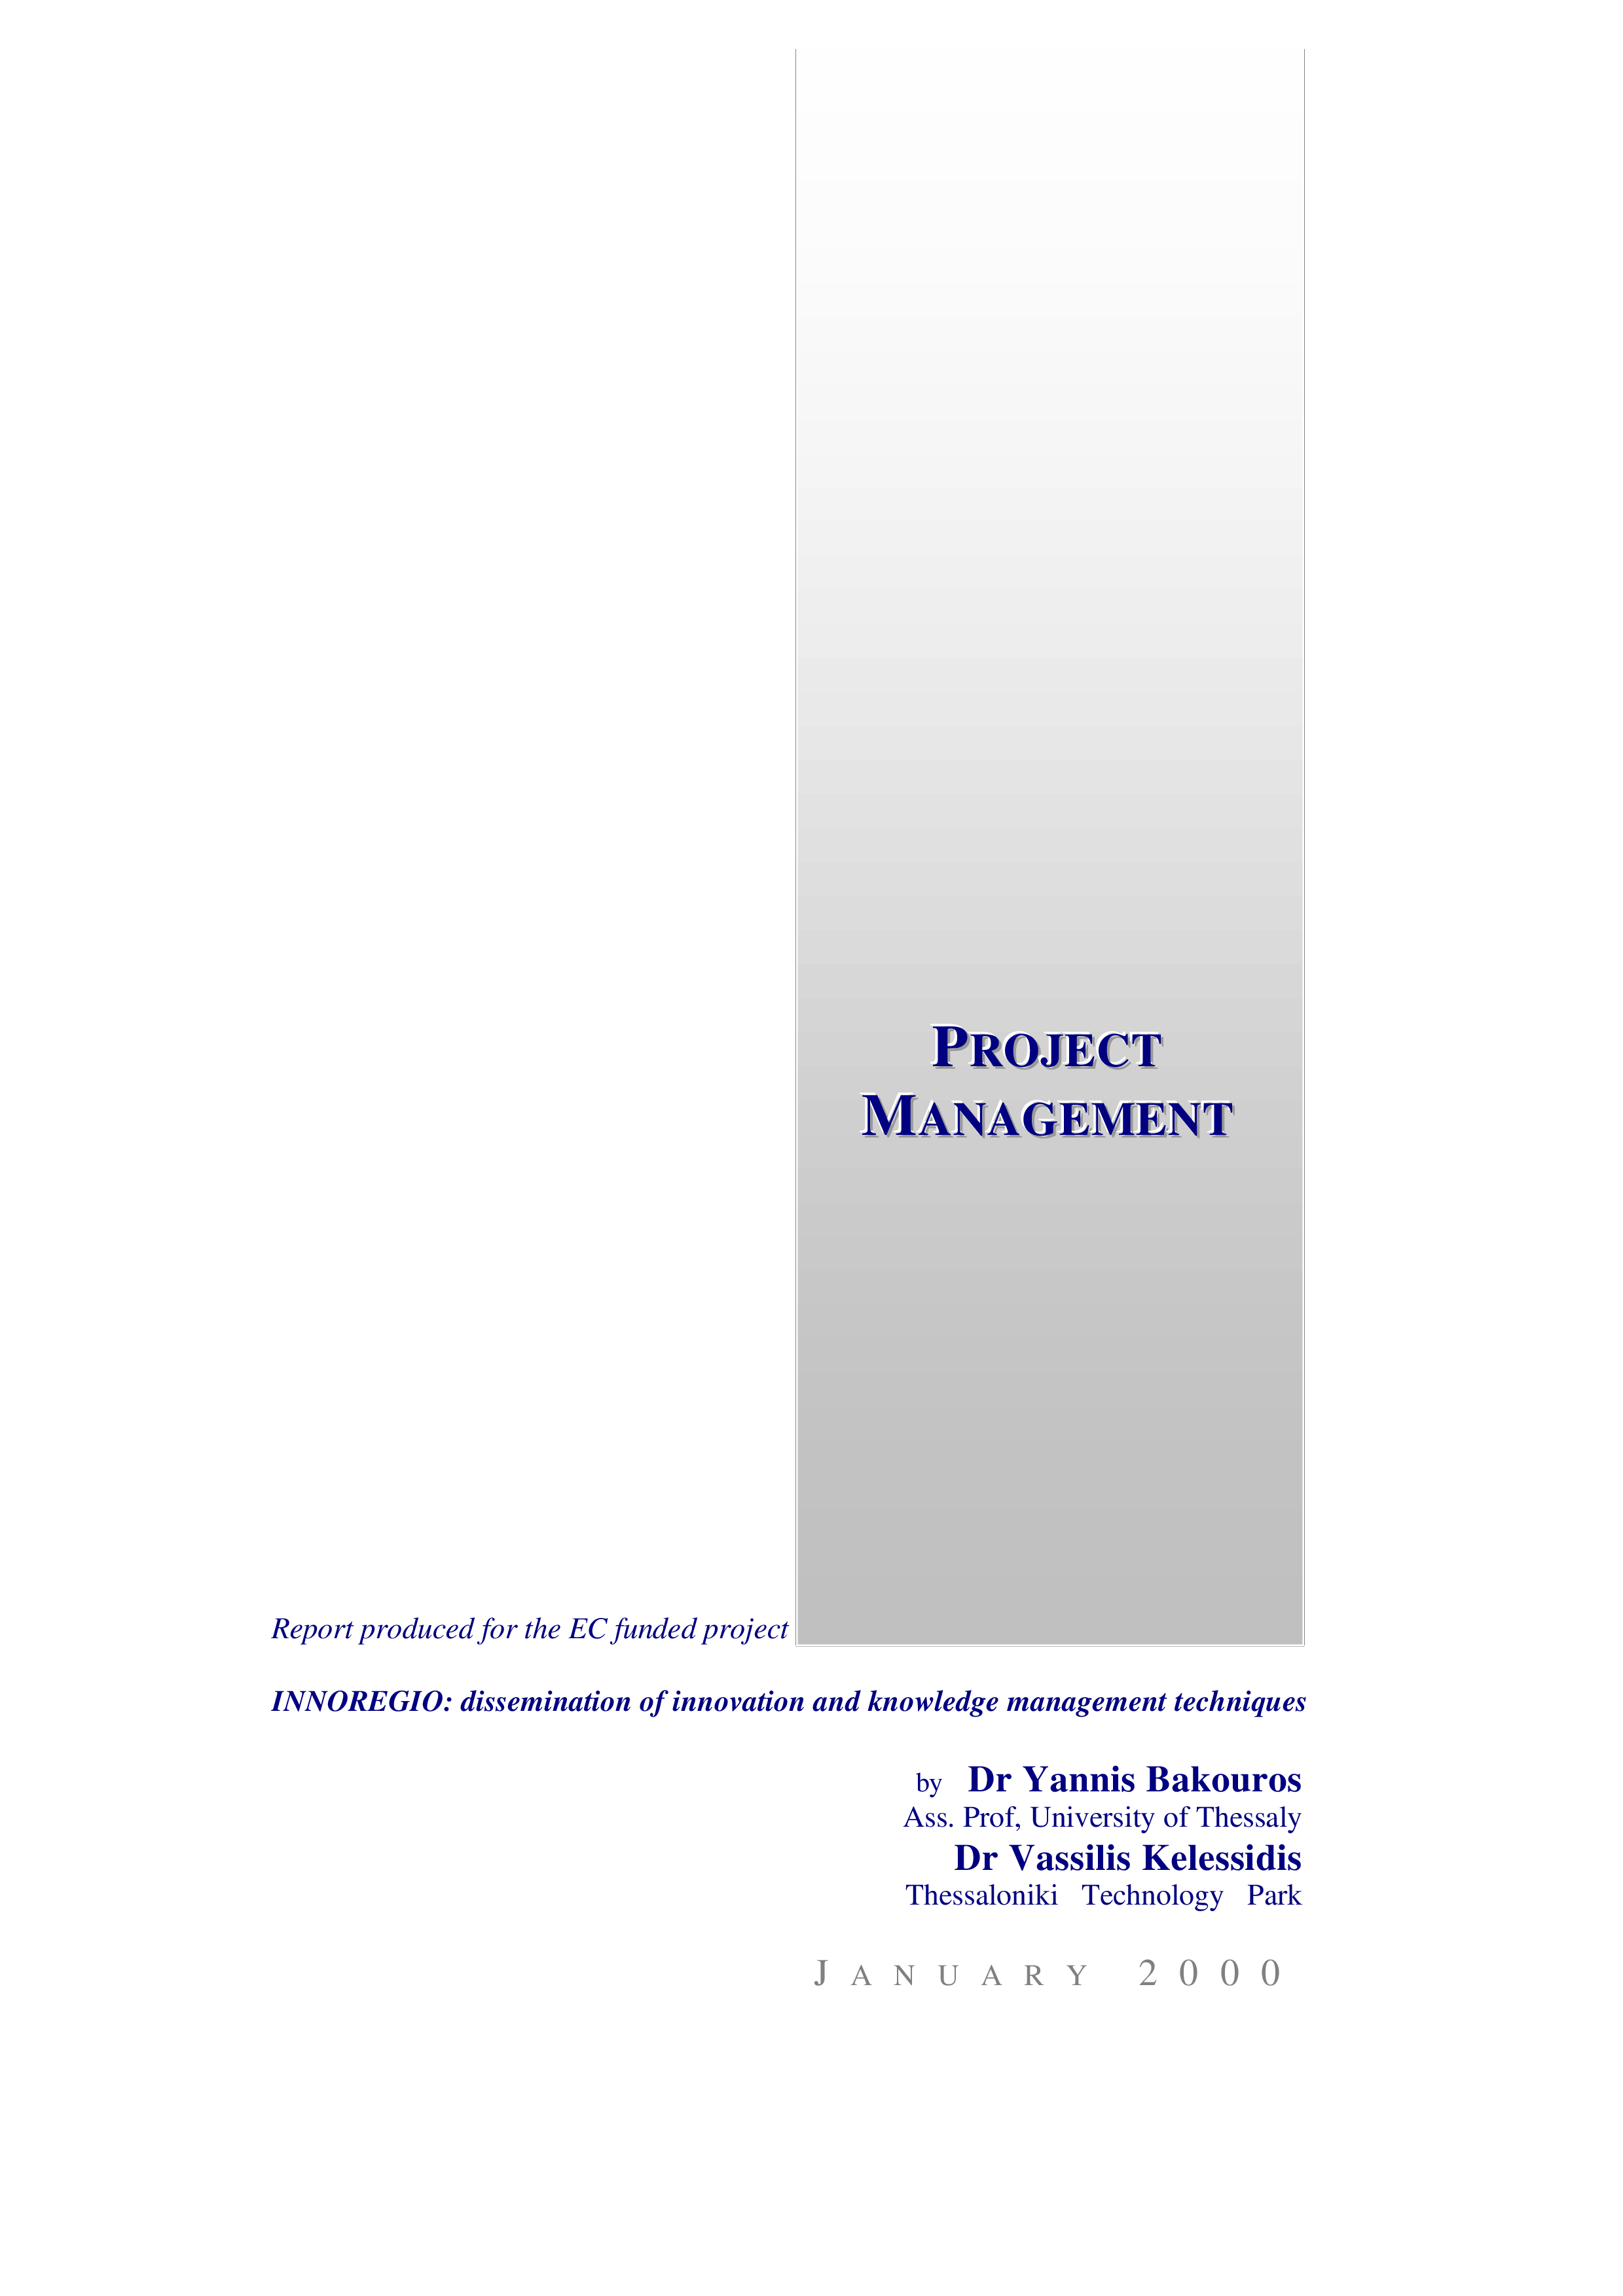 Project Management Activity Schedule main image